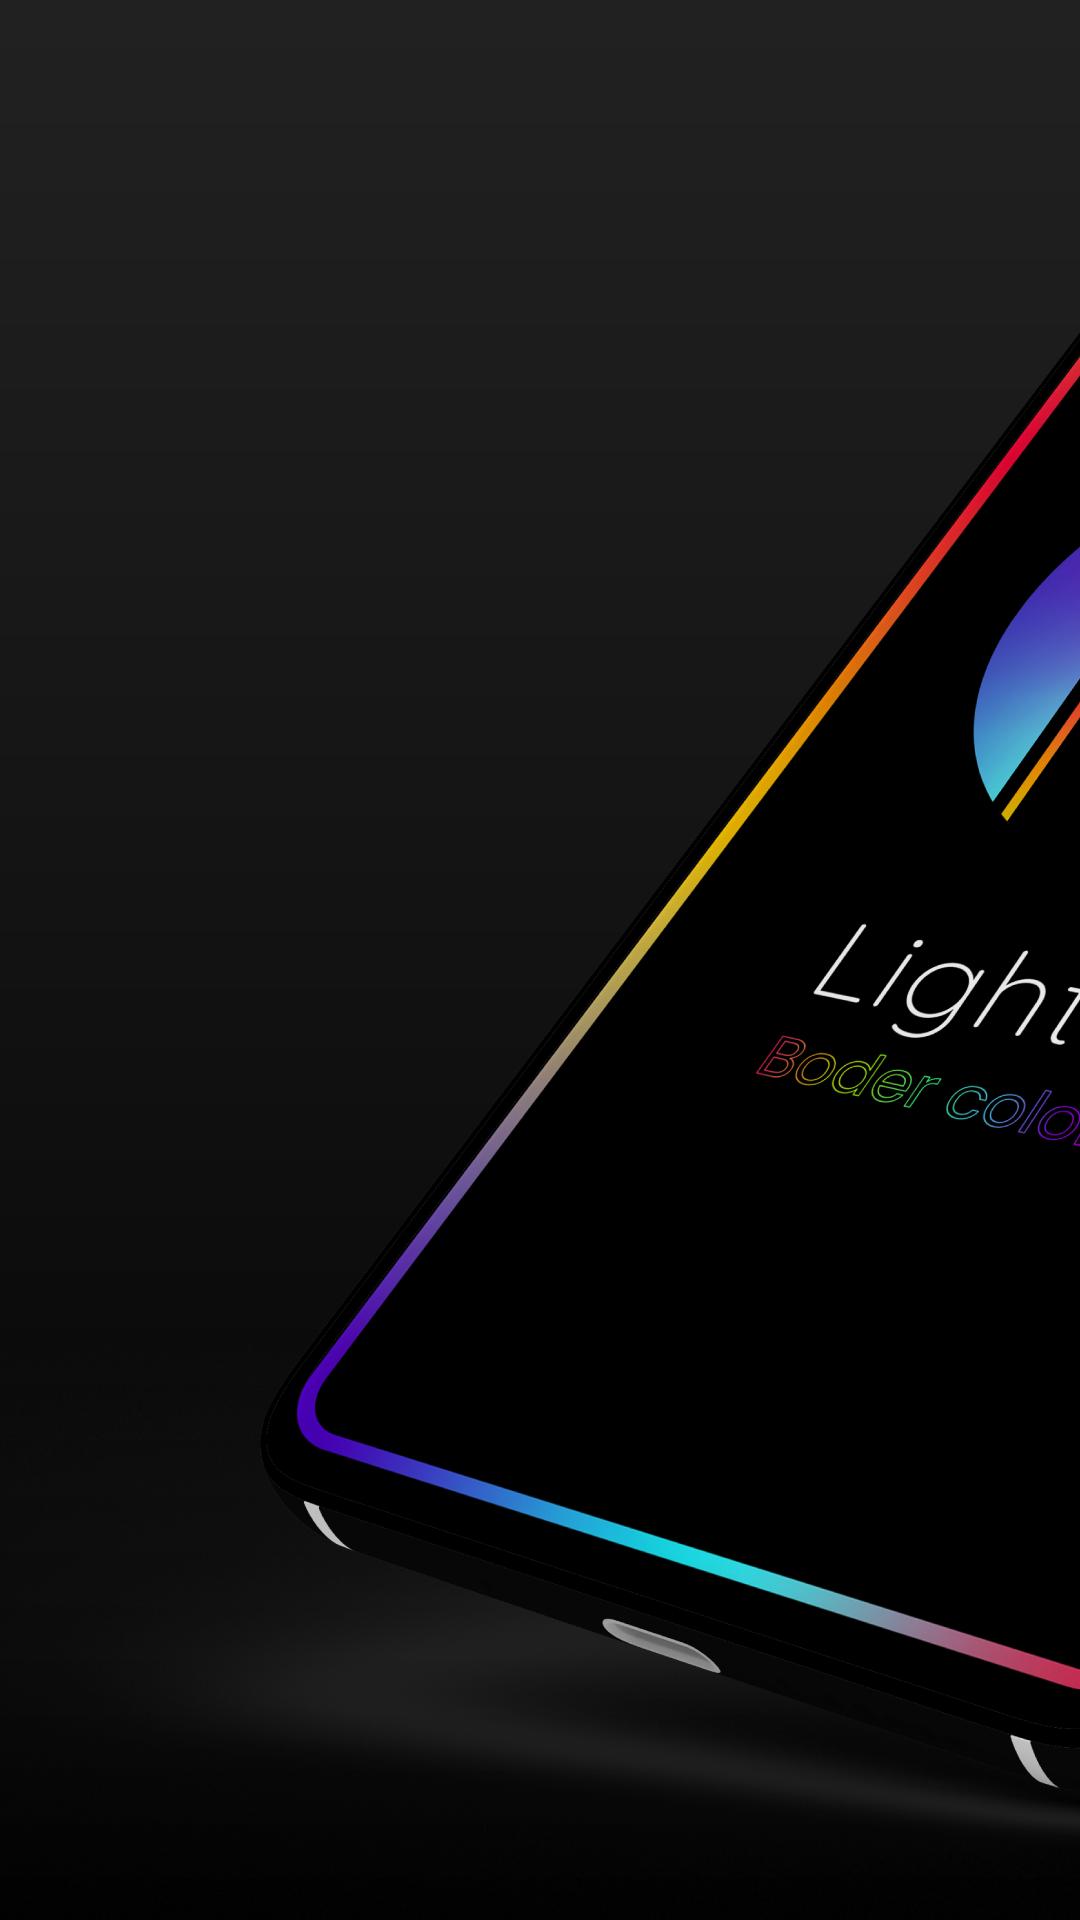 Edge Lighting Colors - Round Colors Galaxy 9.0 Screenshot 5